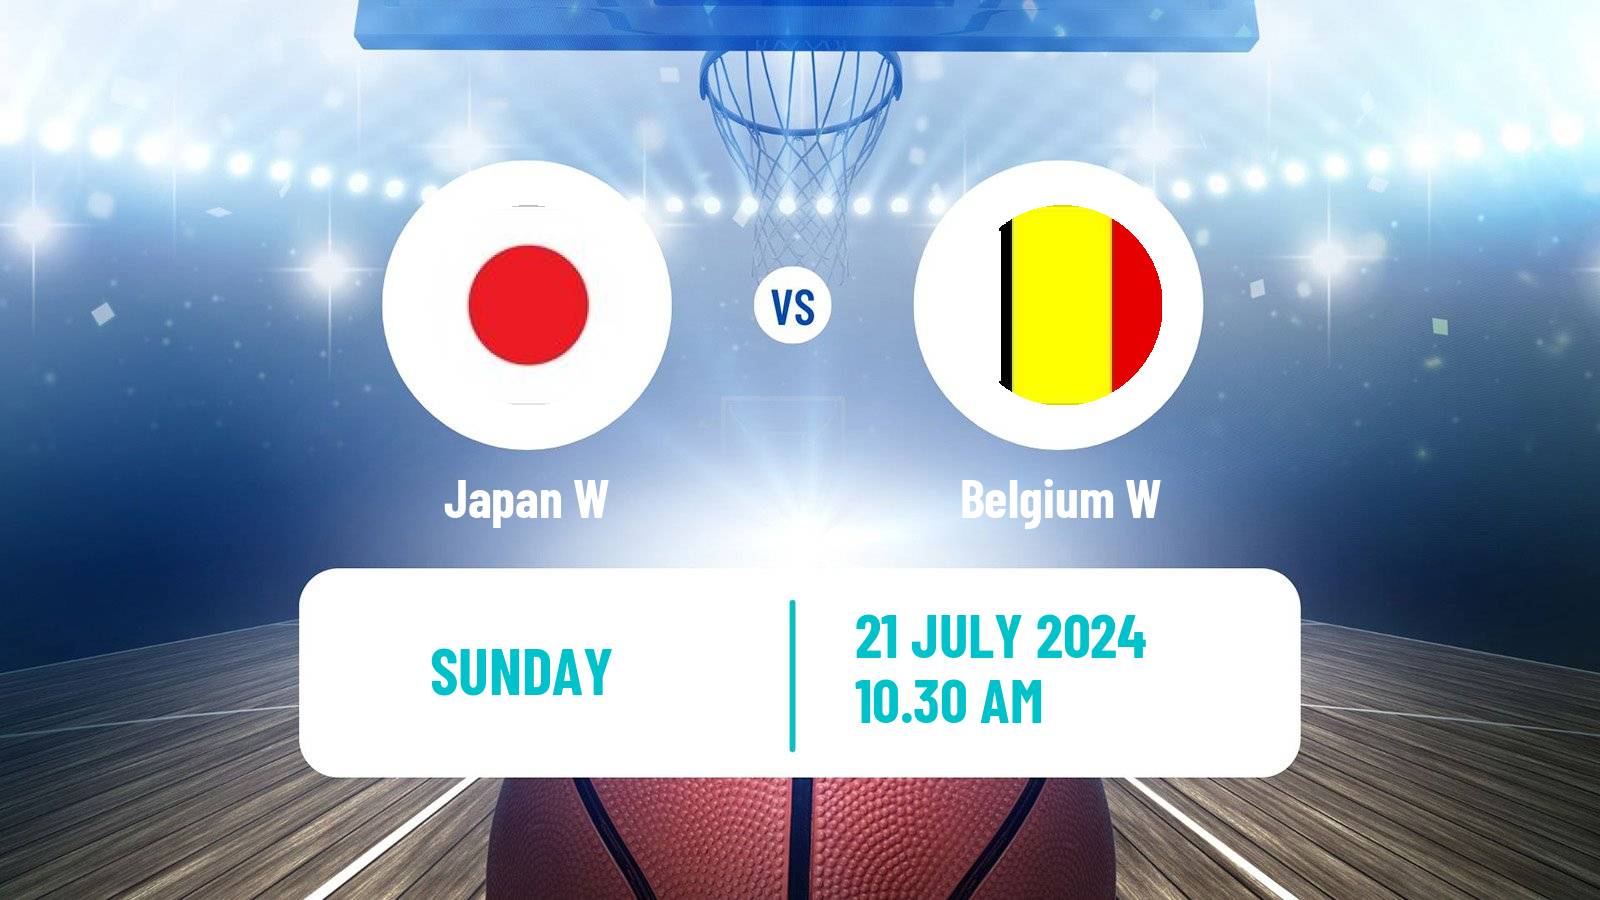 Basketball Friendly International Basketball Women Japan W - Belgium W